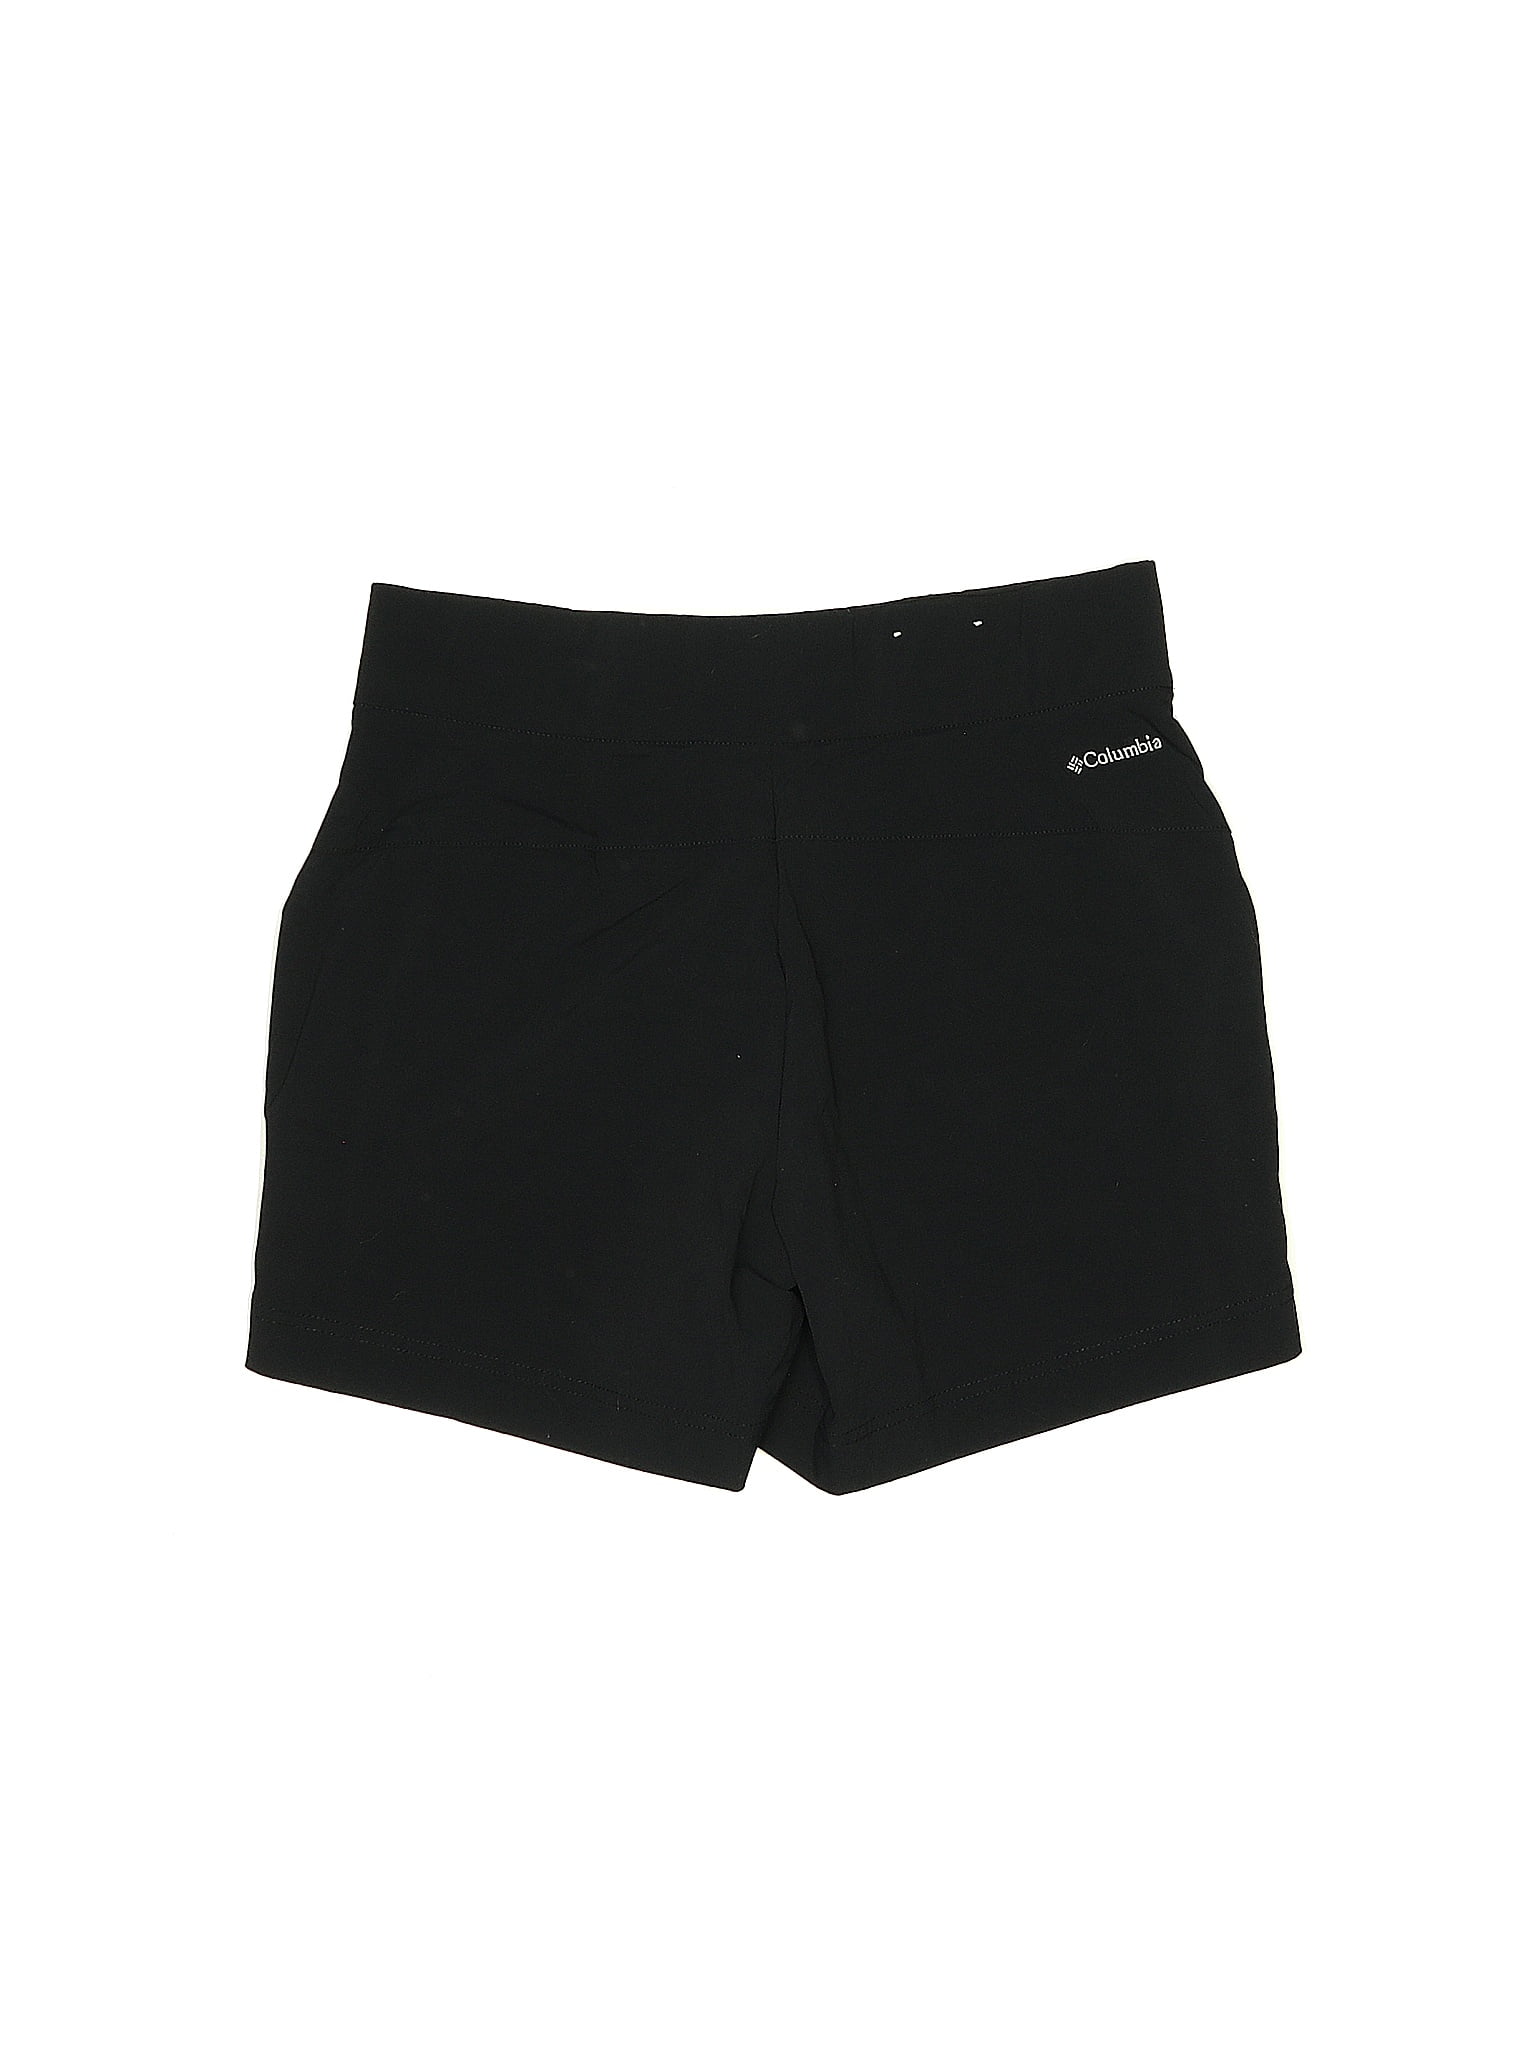 Zelos Solid Black Athletic Shorts Size M - 68% off